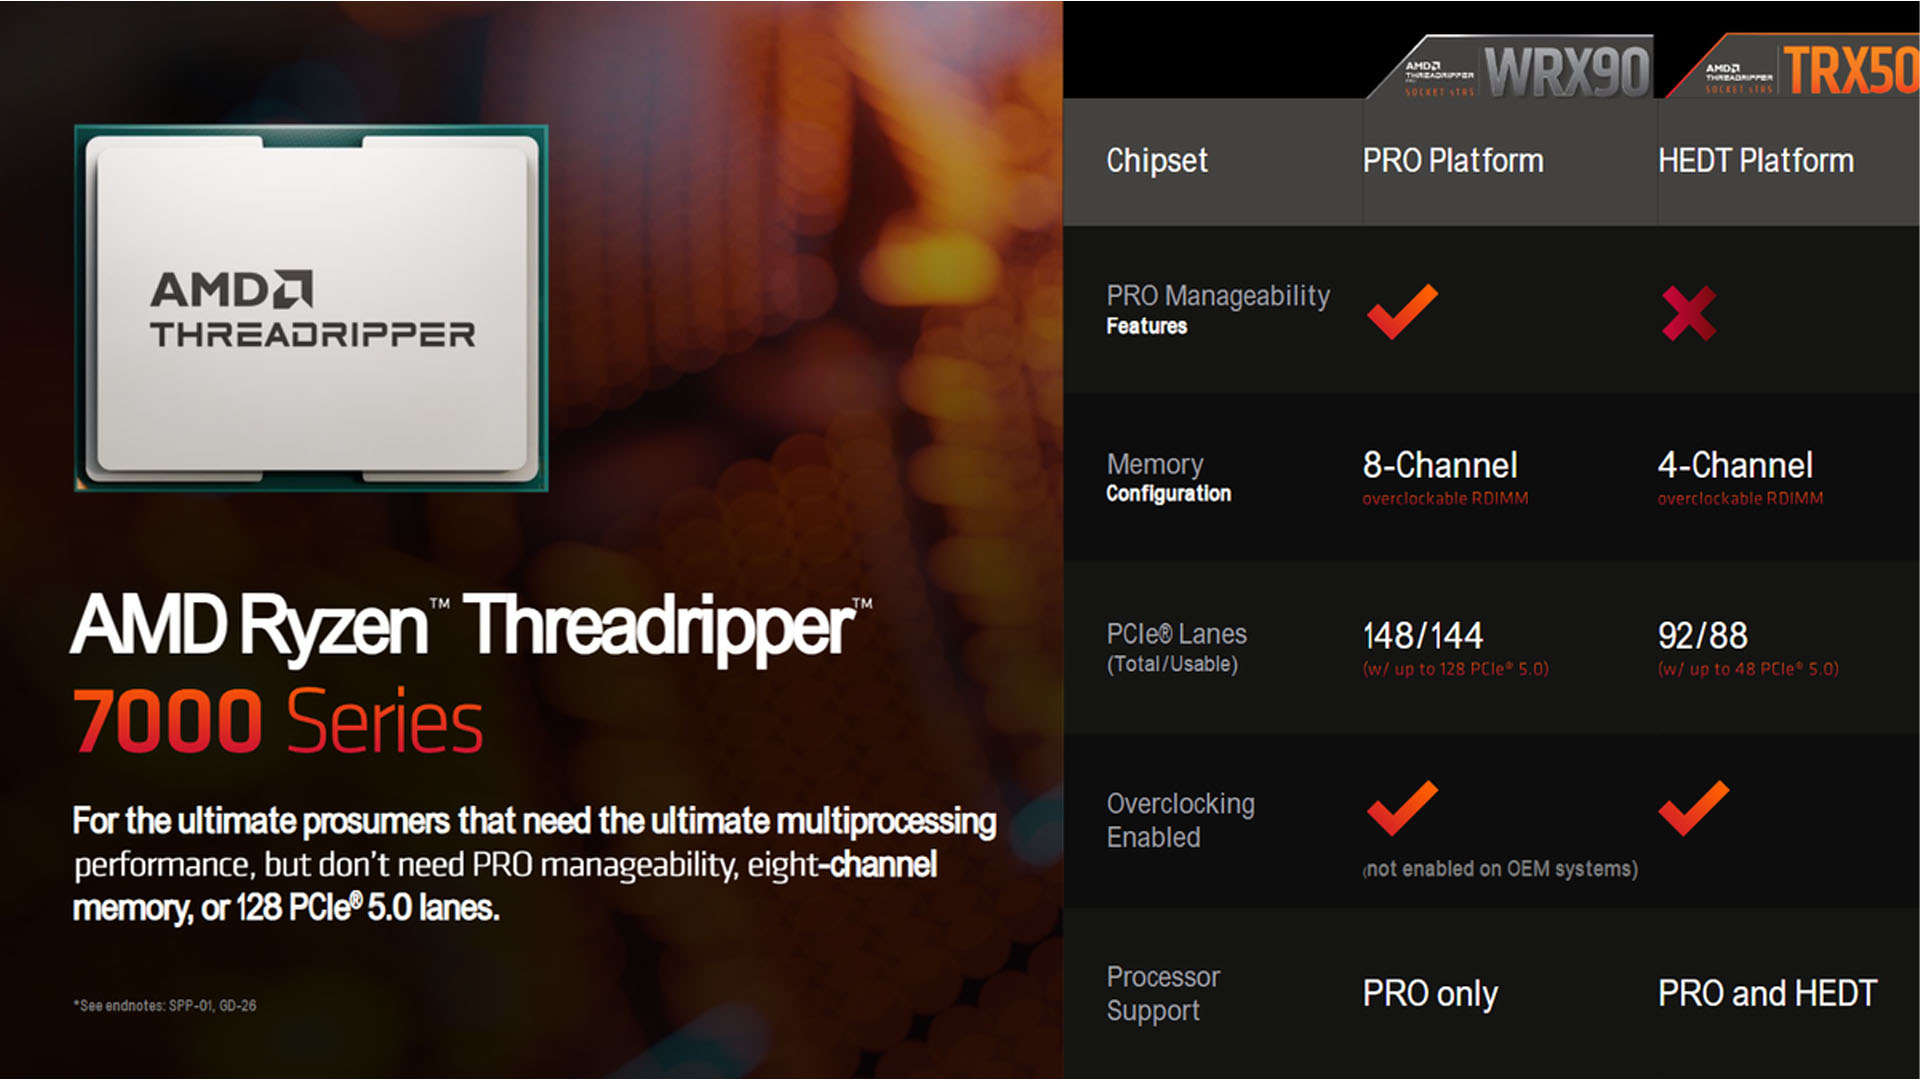 AMD Threadripper 7000 pro vs hedt